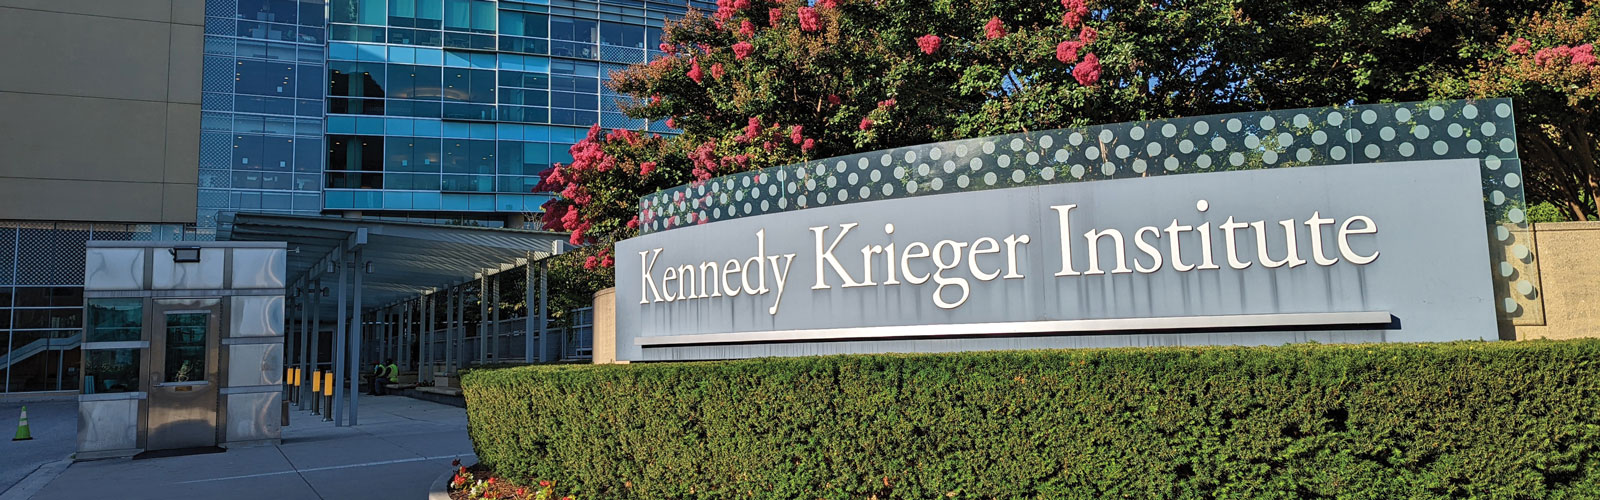 Kennedy Krieger Institute sign